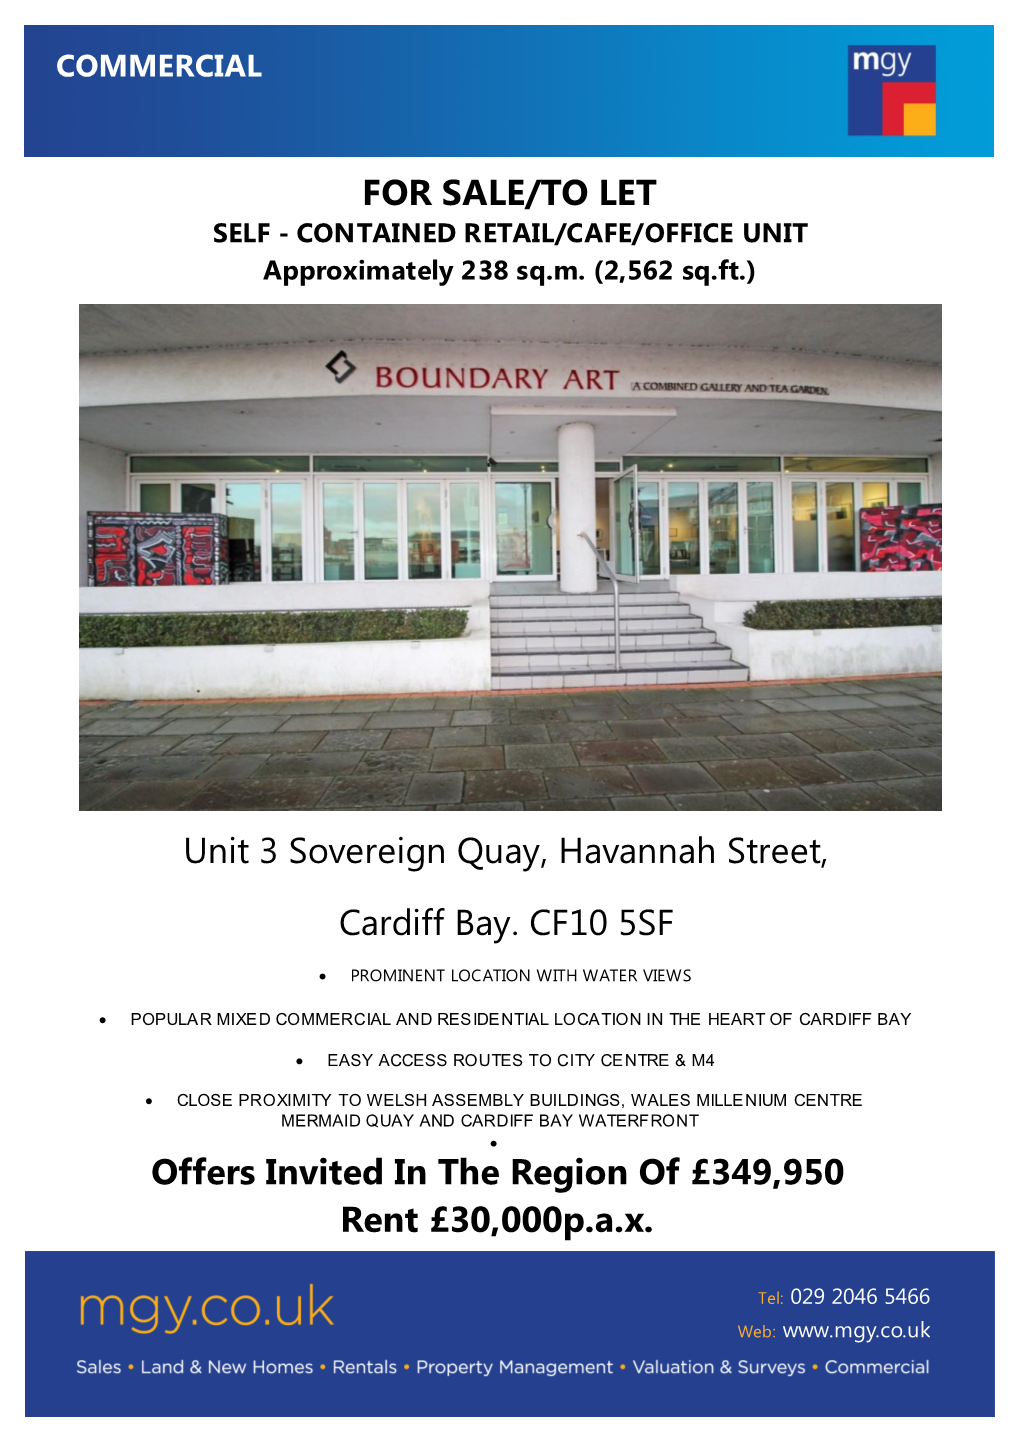 Unit 3 Sovereign Quay, Havannah Street, Cardiff Bay. CF10 5SF Offers